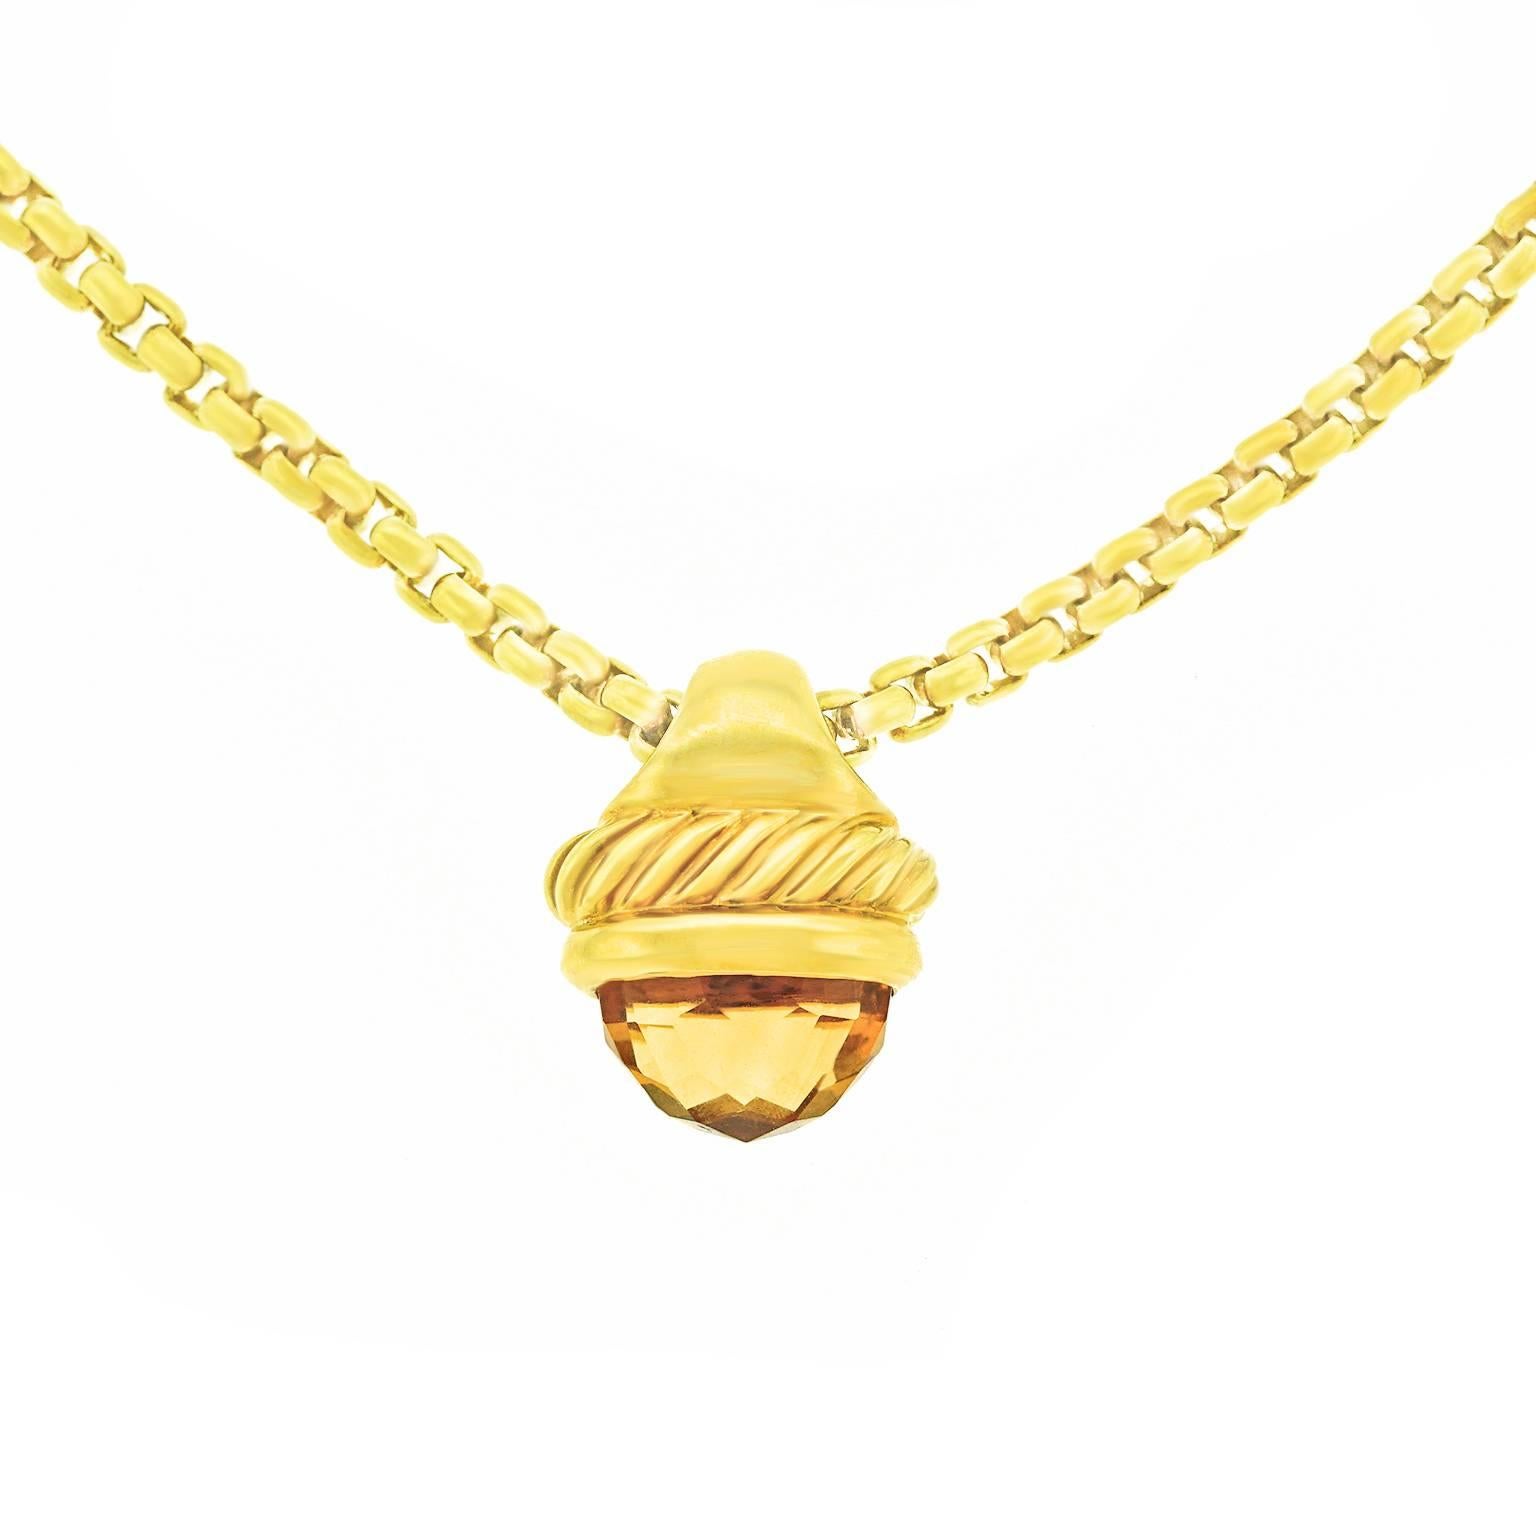 David Yurman Citrine Cable Pendant and Chain in Gold